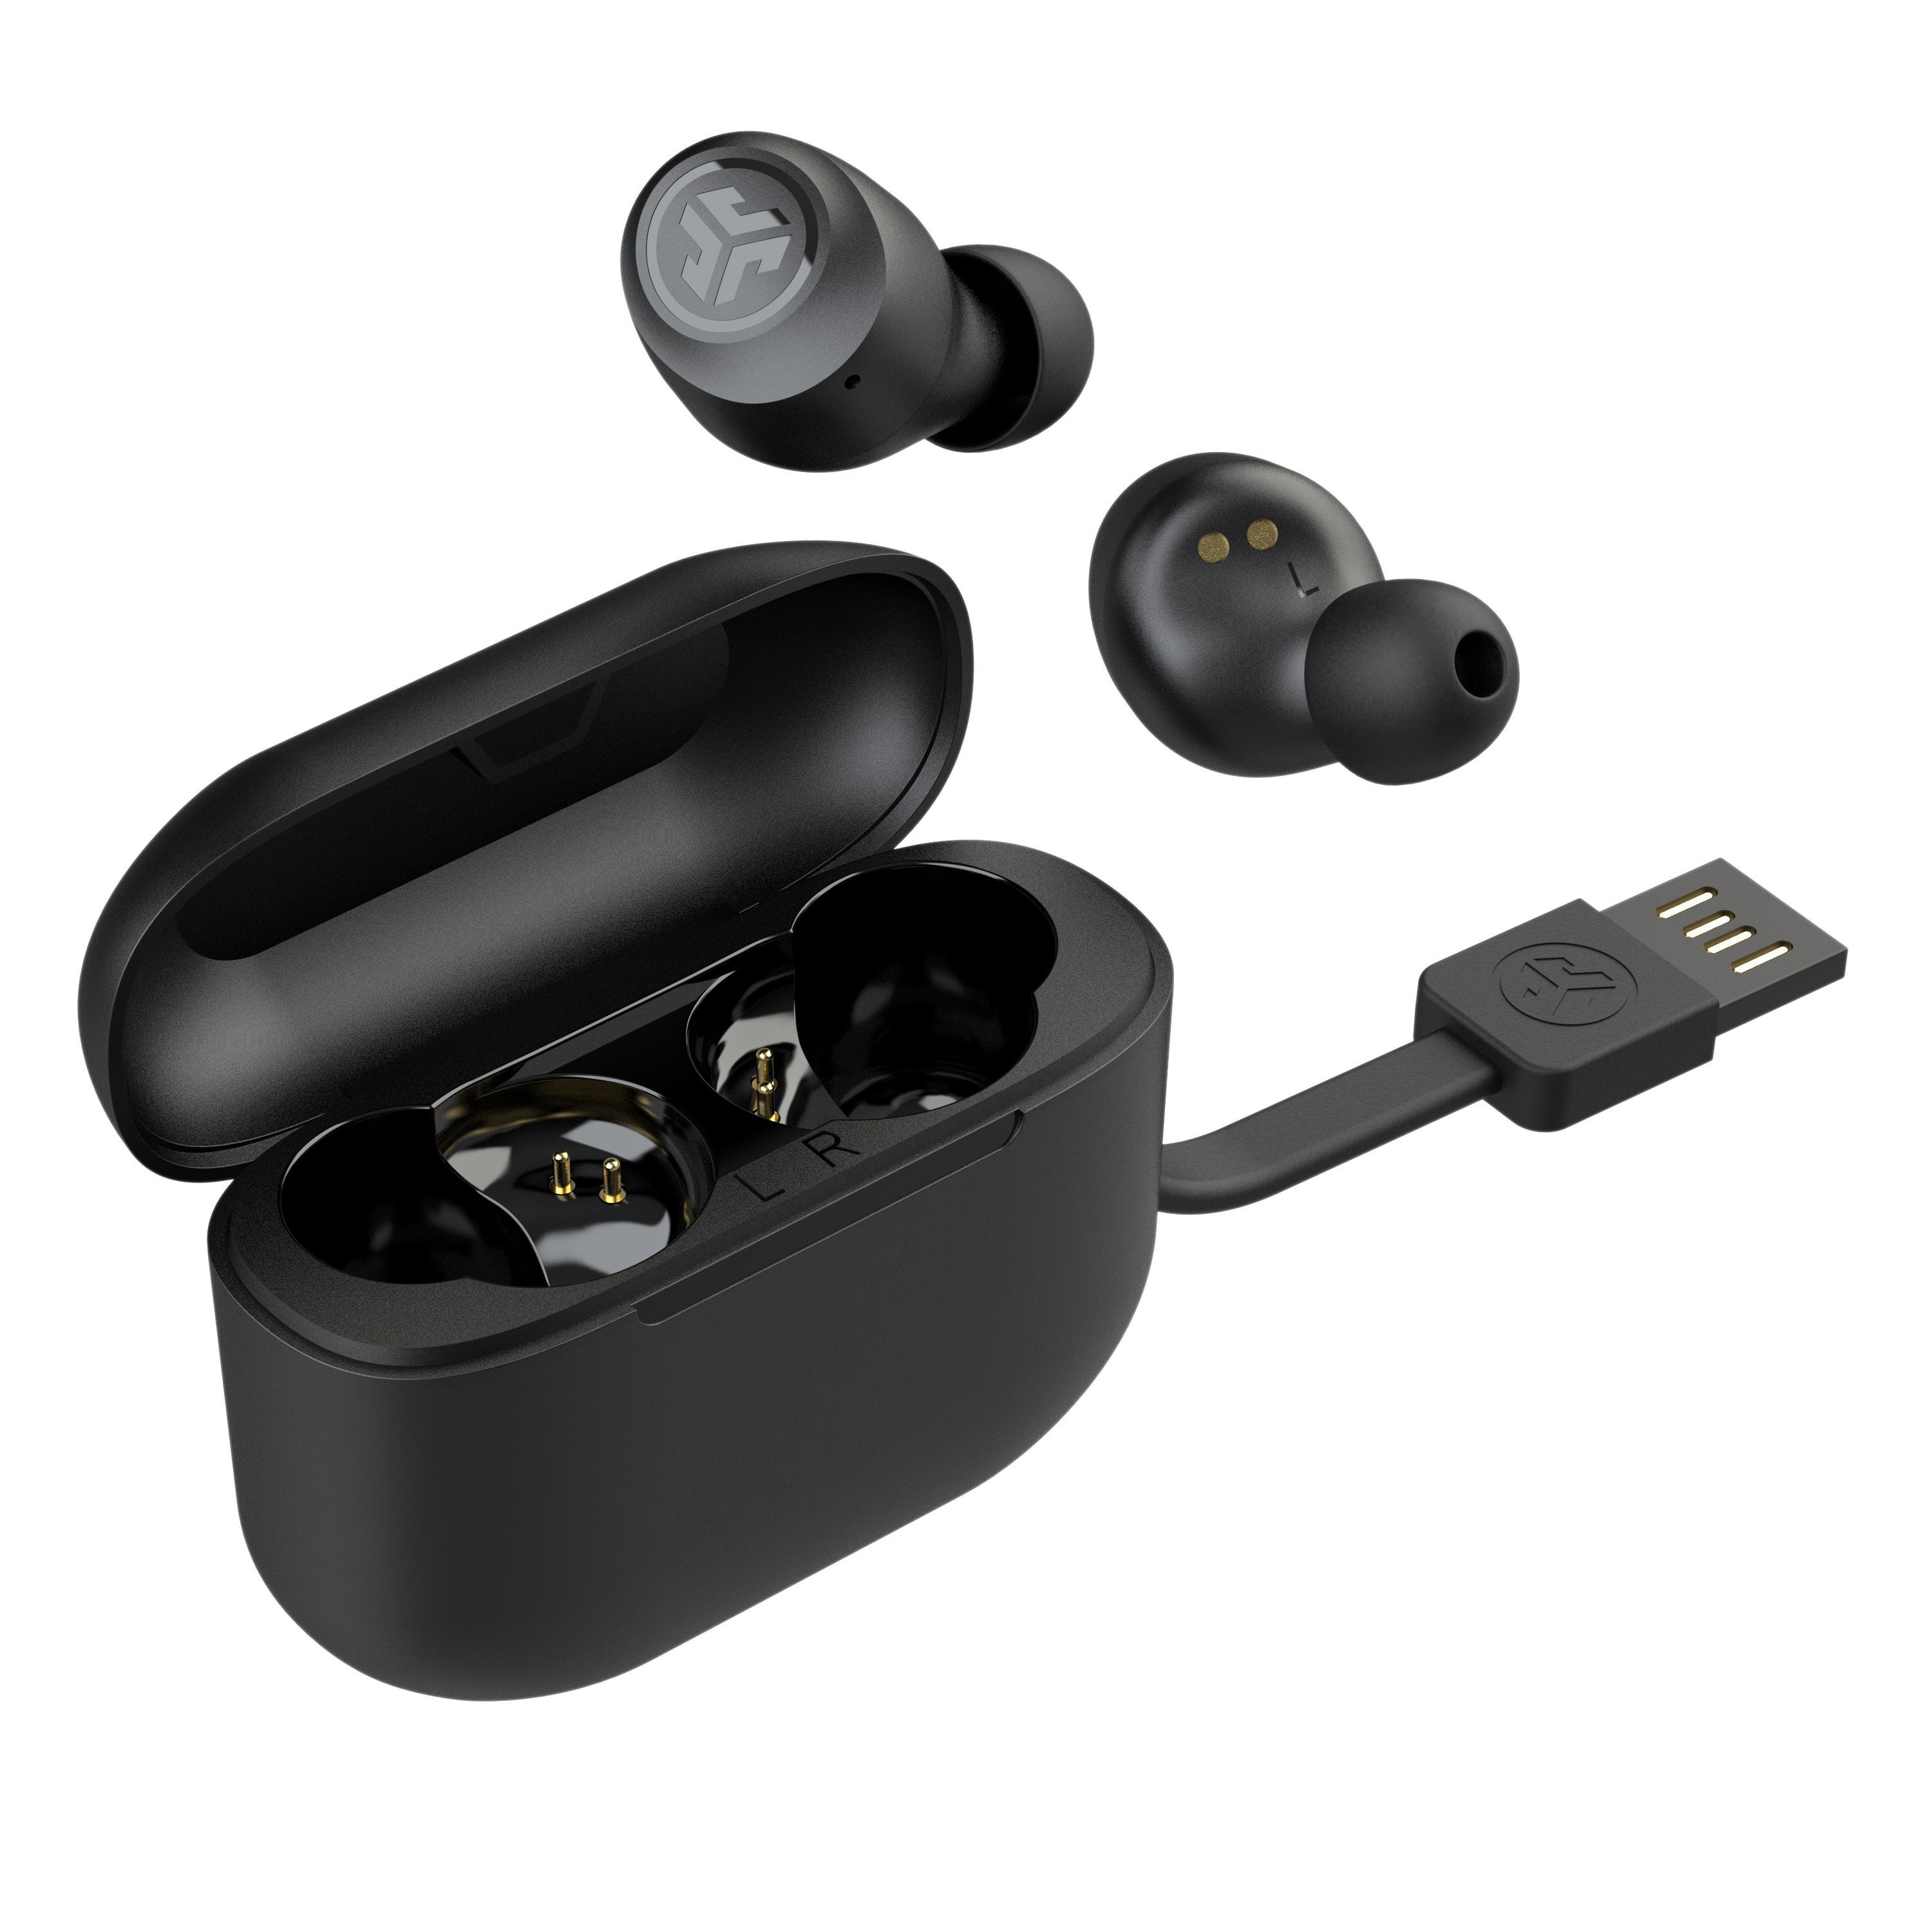 Kopfhörer True Bluetooth Go Black Pop JLAB Wireless, In-ear Air